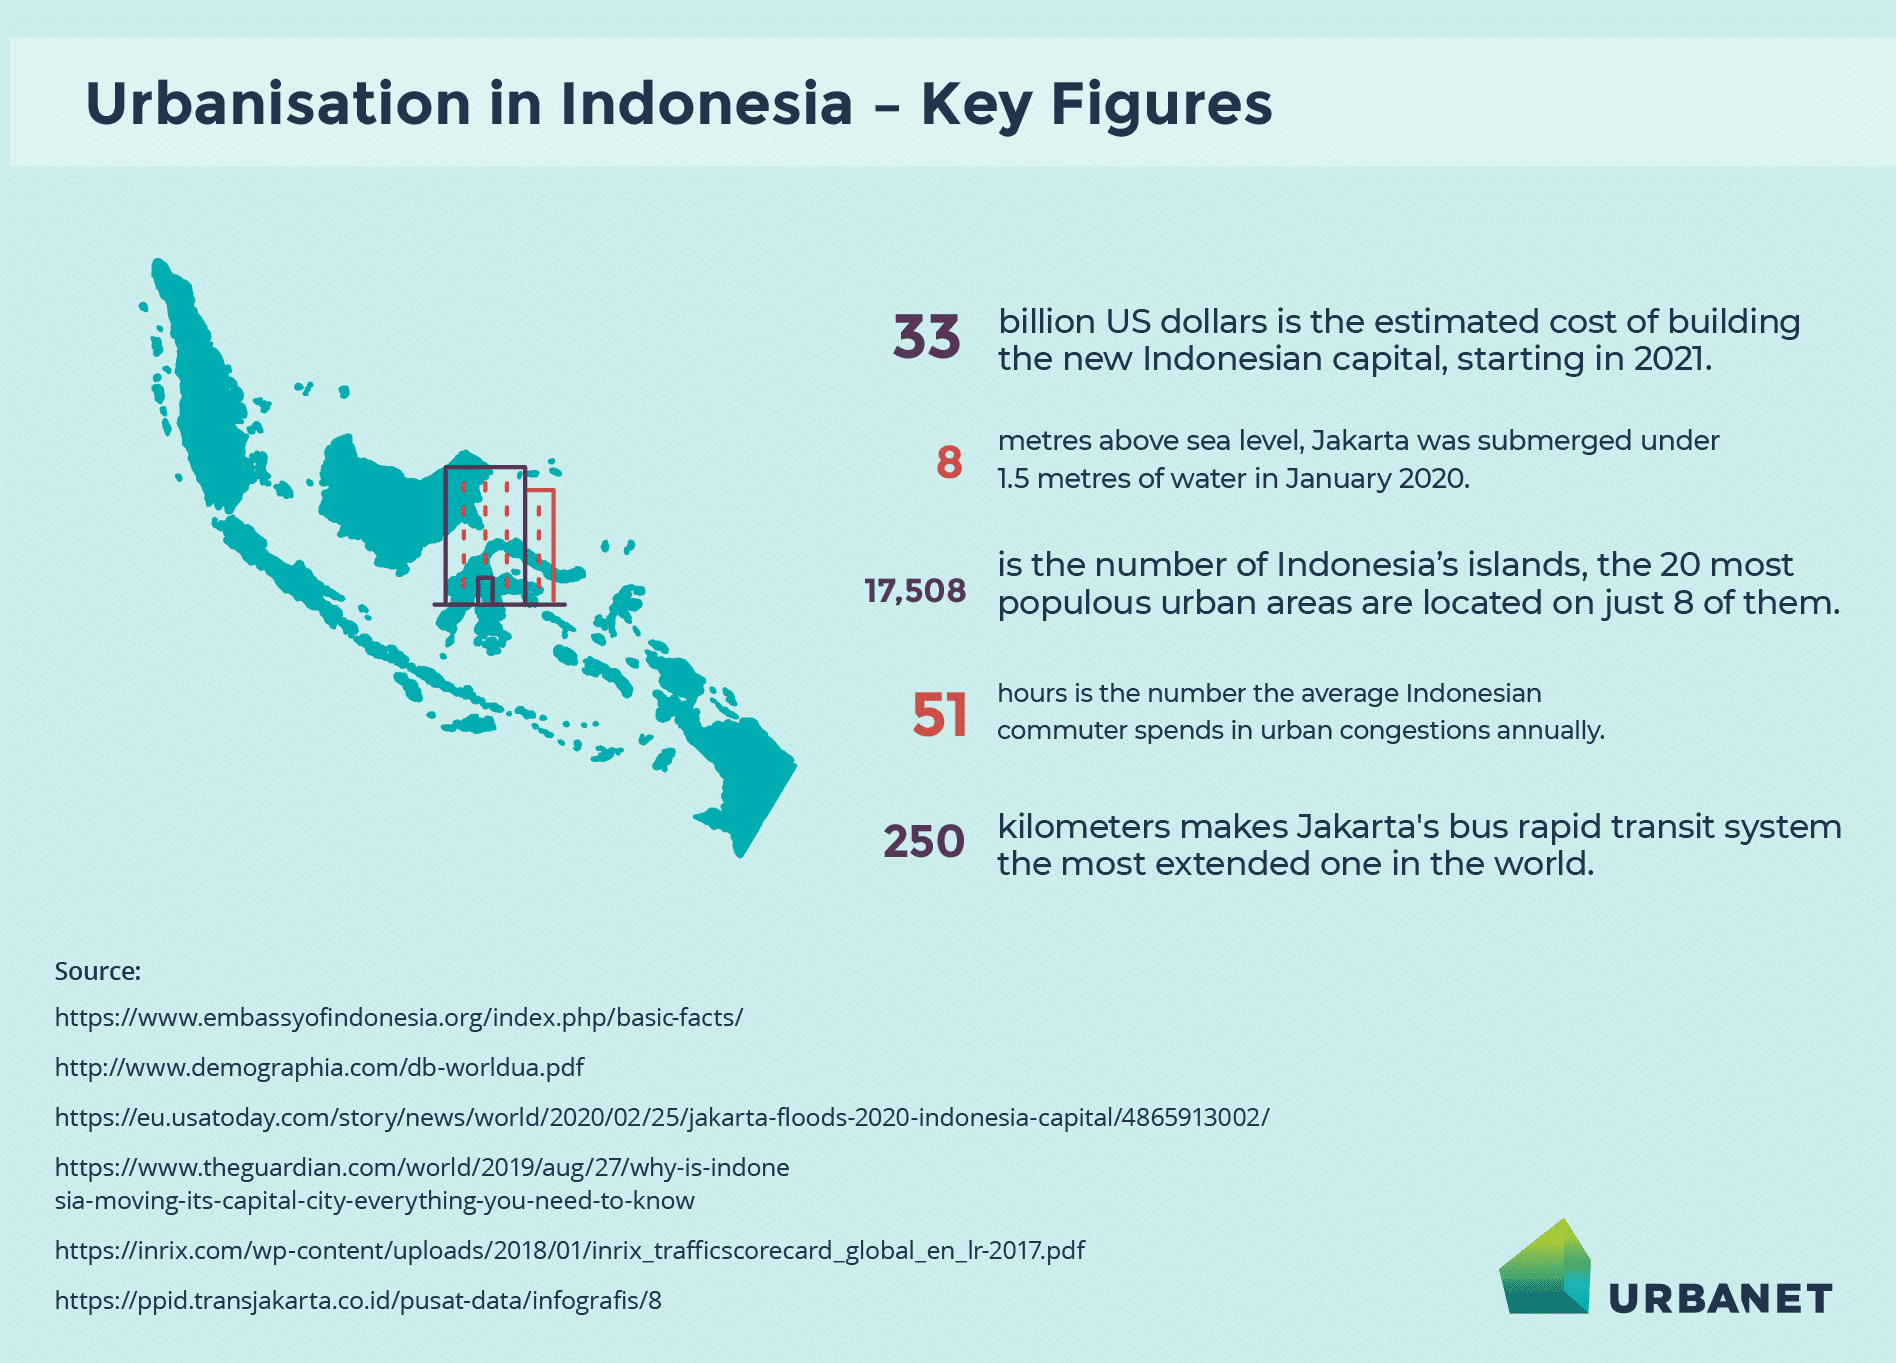 Infographic on Key Figures of Urbanisation in Indonesia